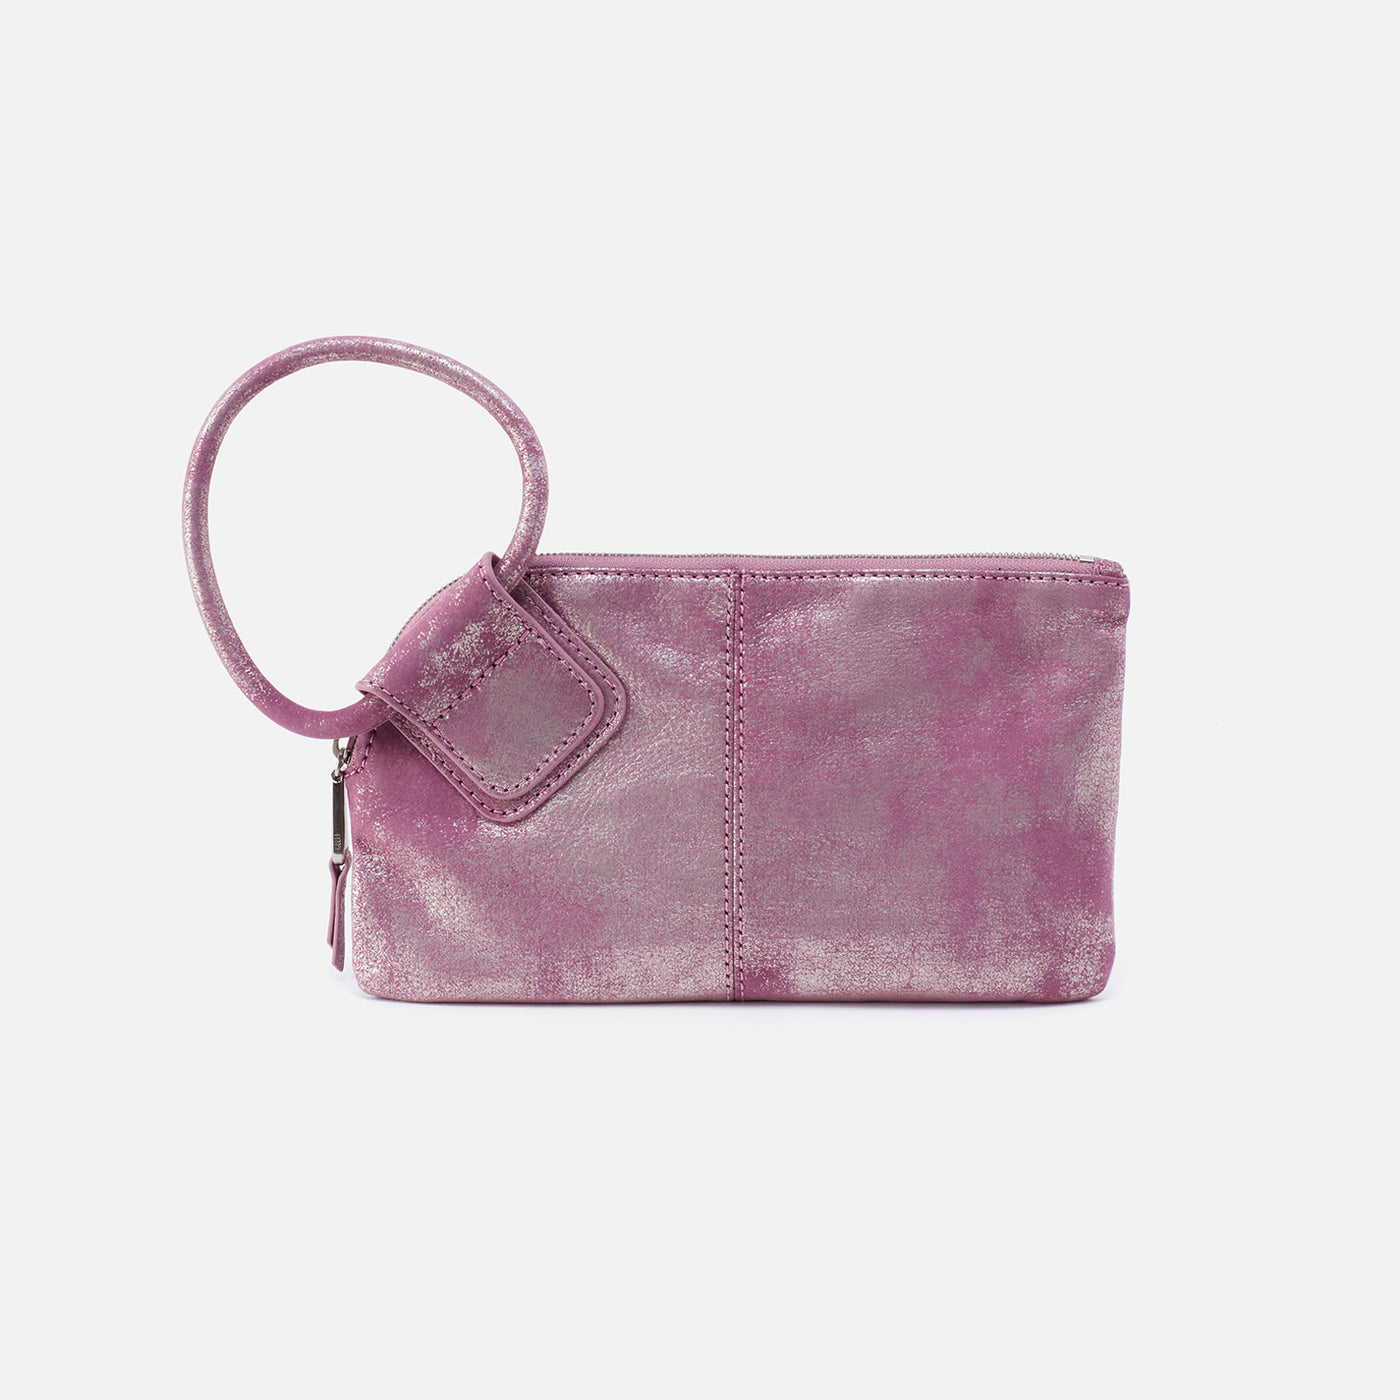 Sable Wristlet in Metallic Leather - Violet Metallic